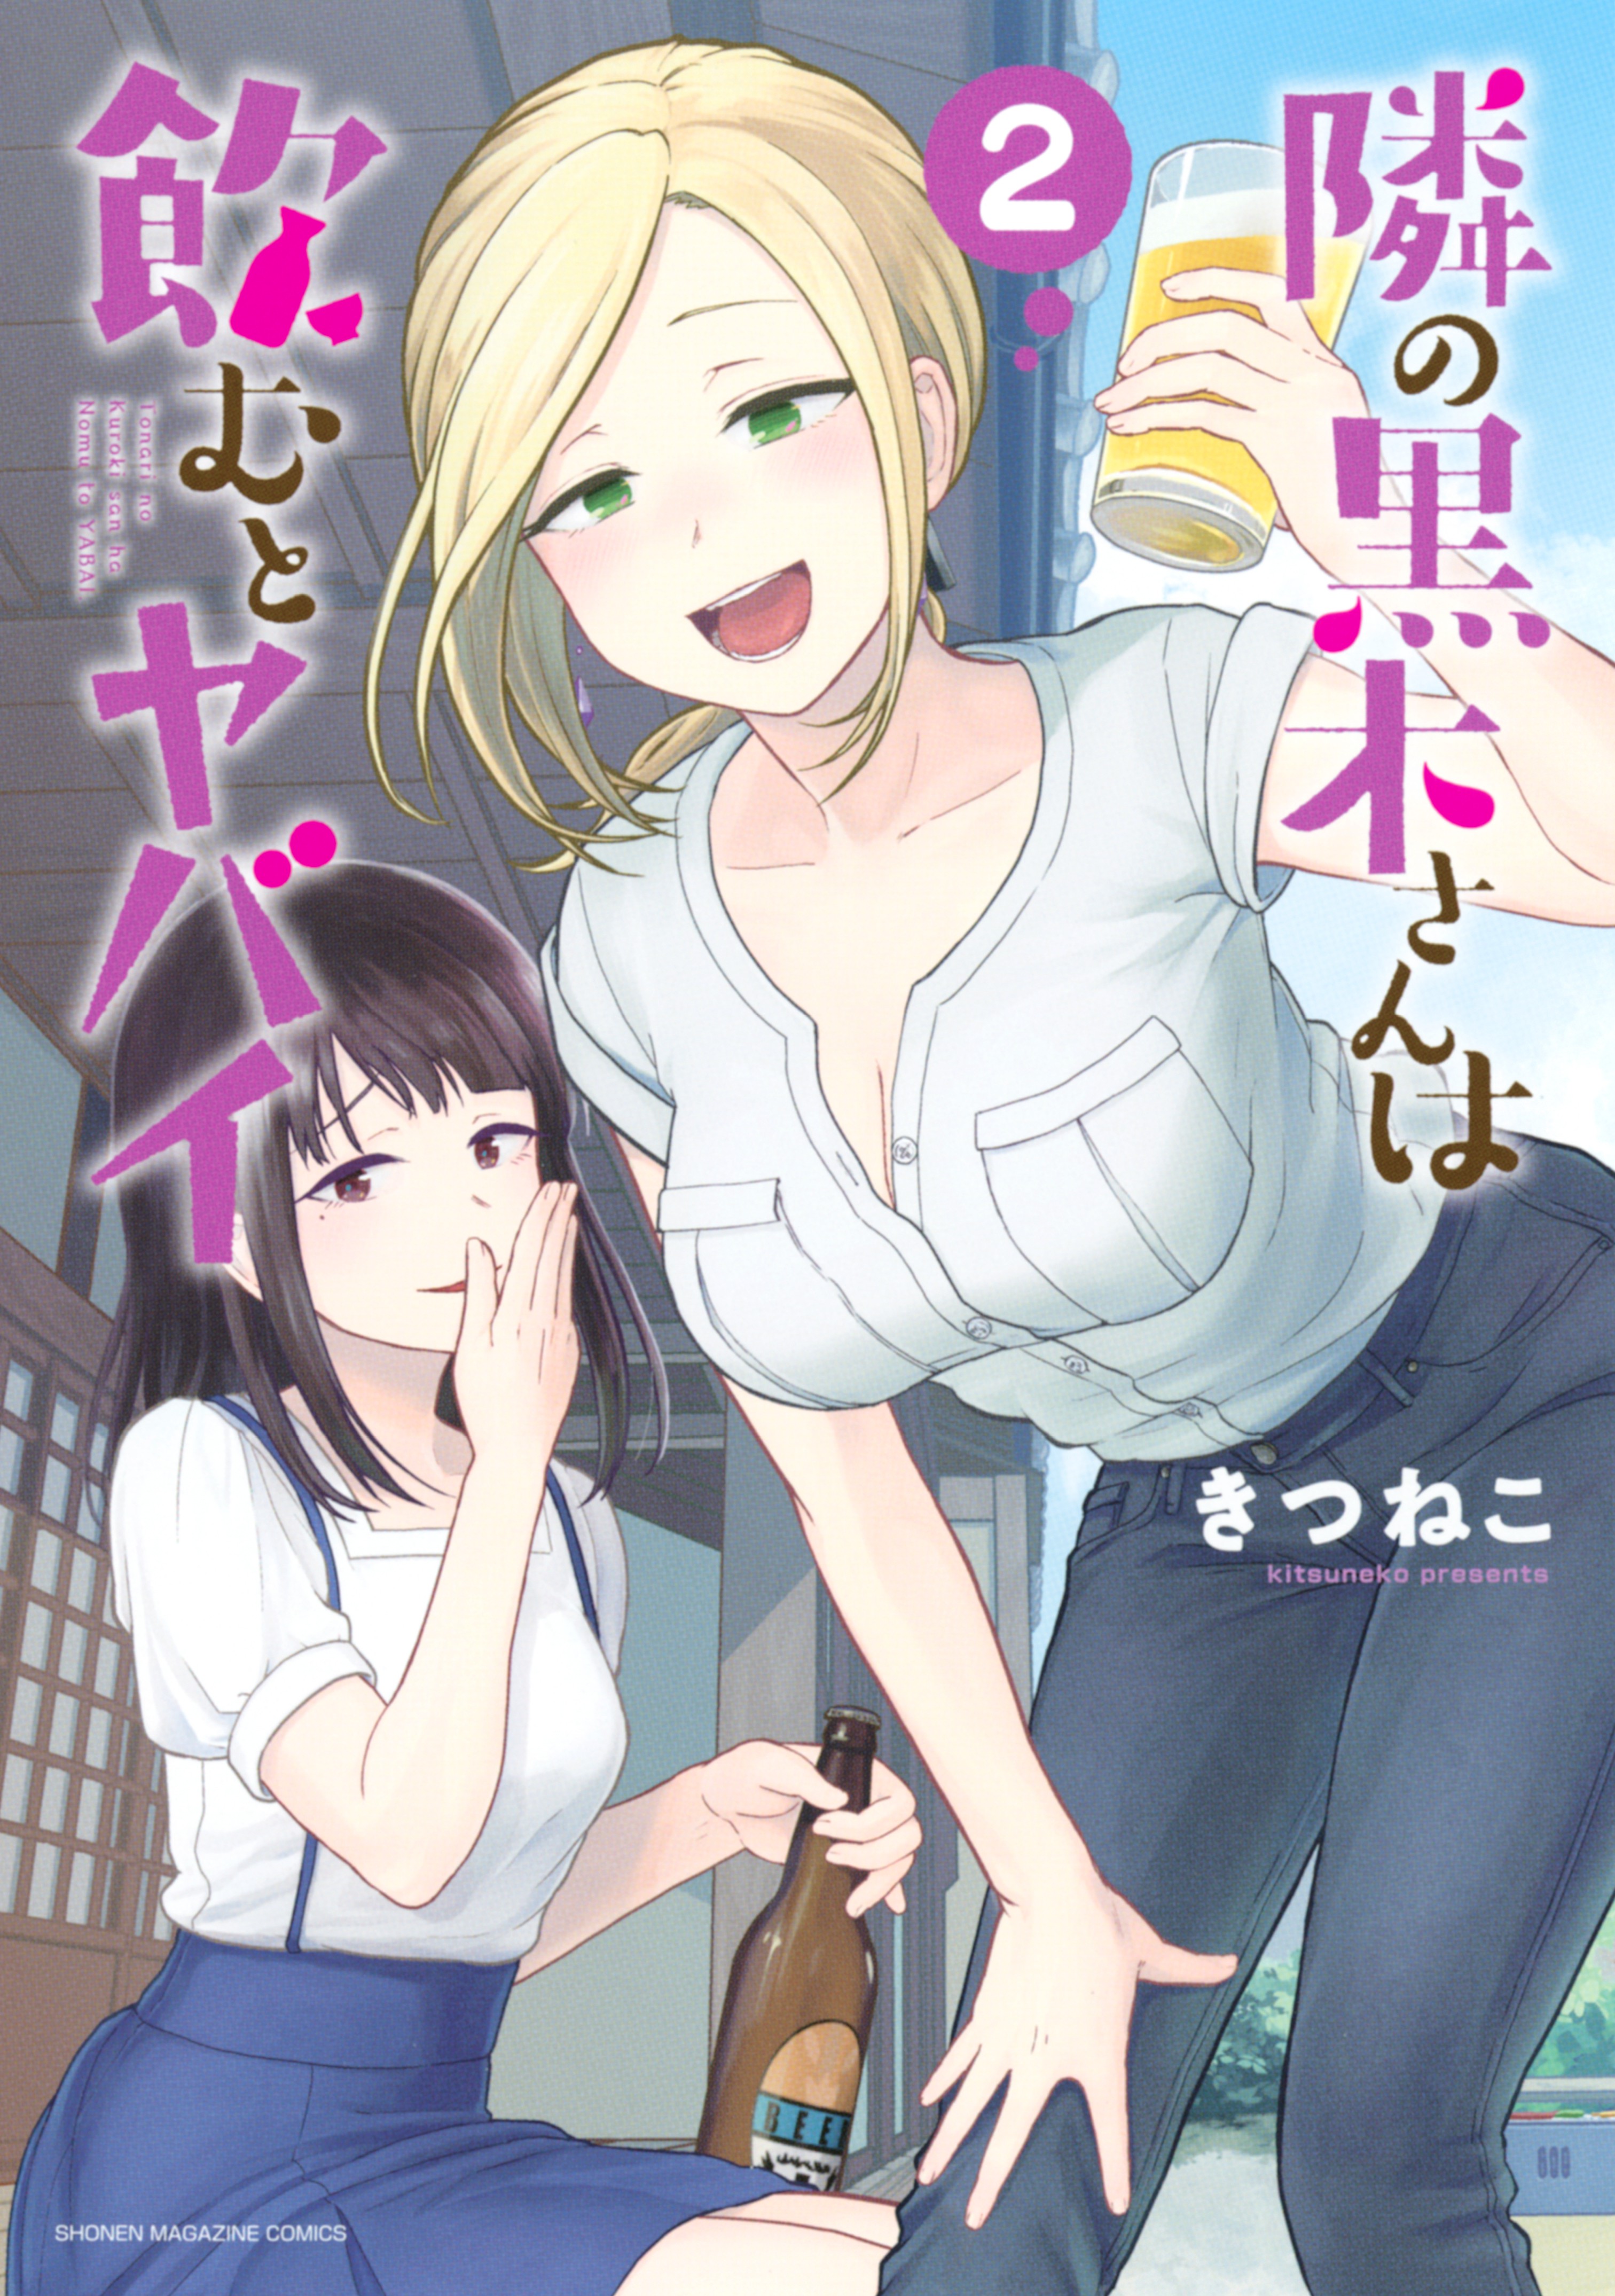 Manga Like Asami Kuroki's on A(nother) Bender!